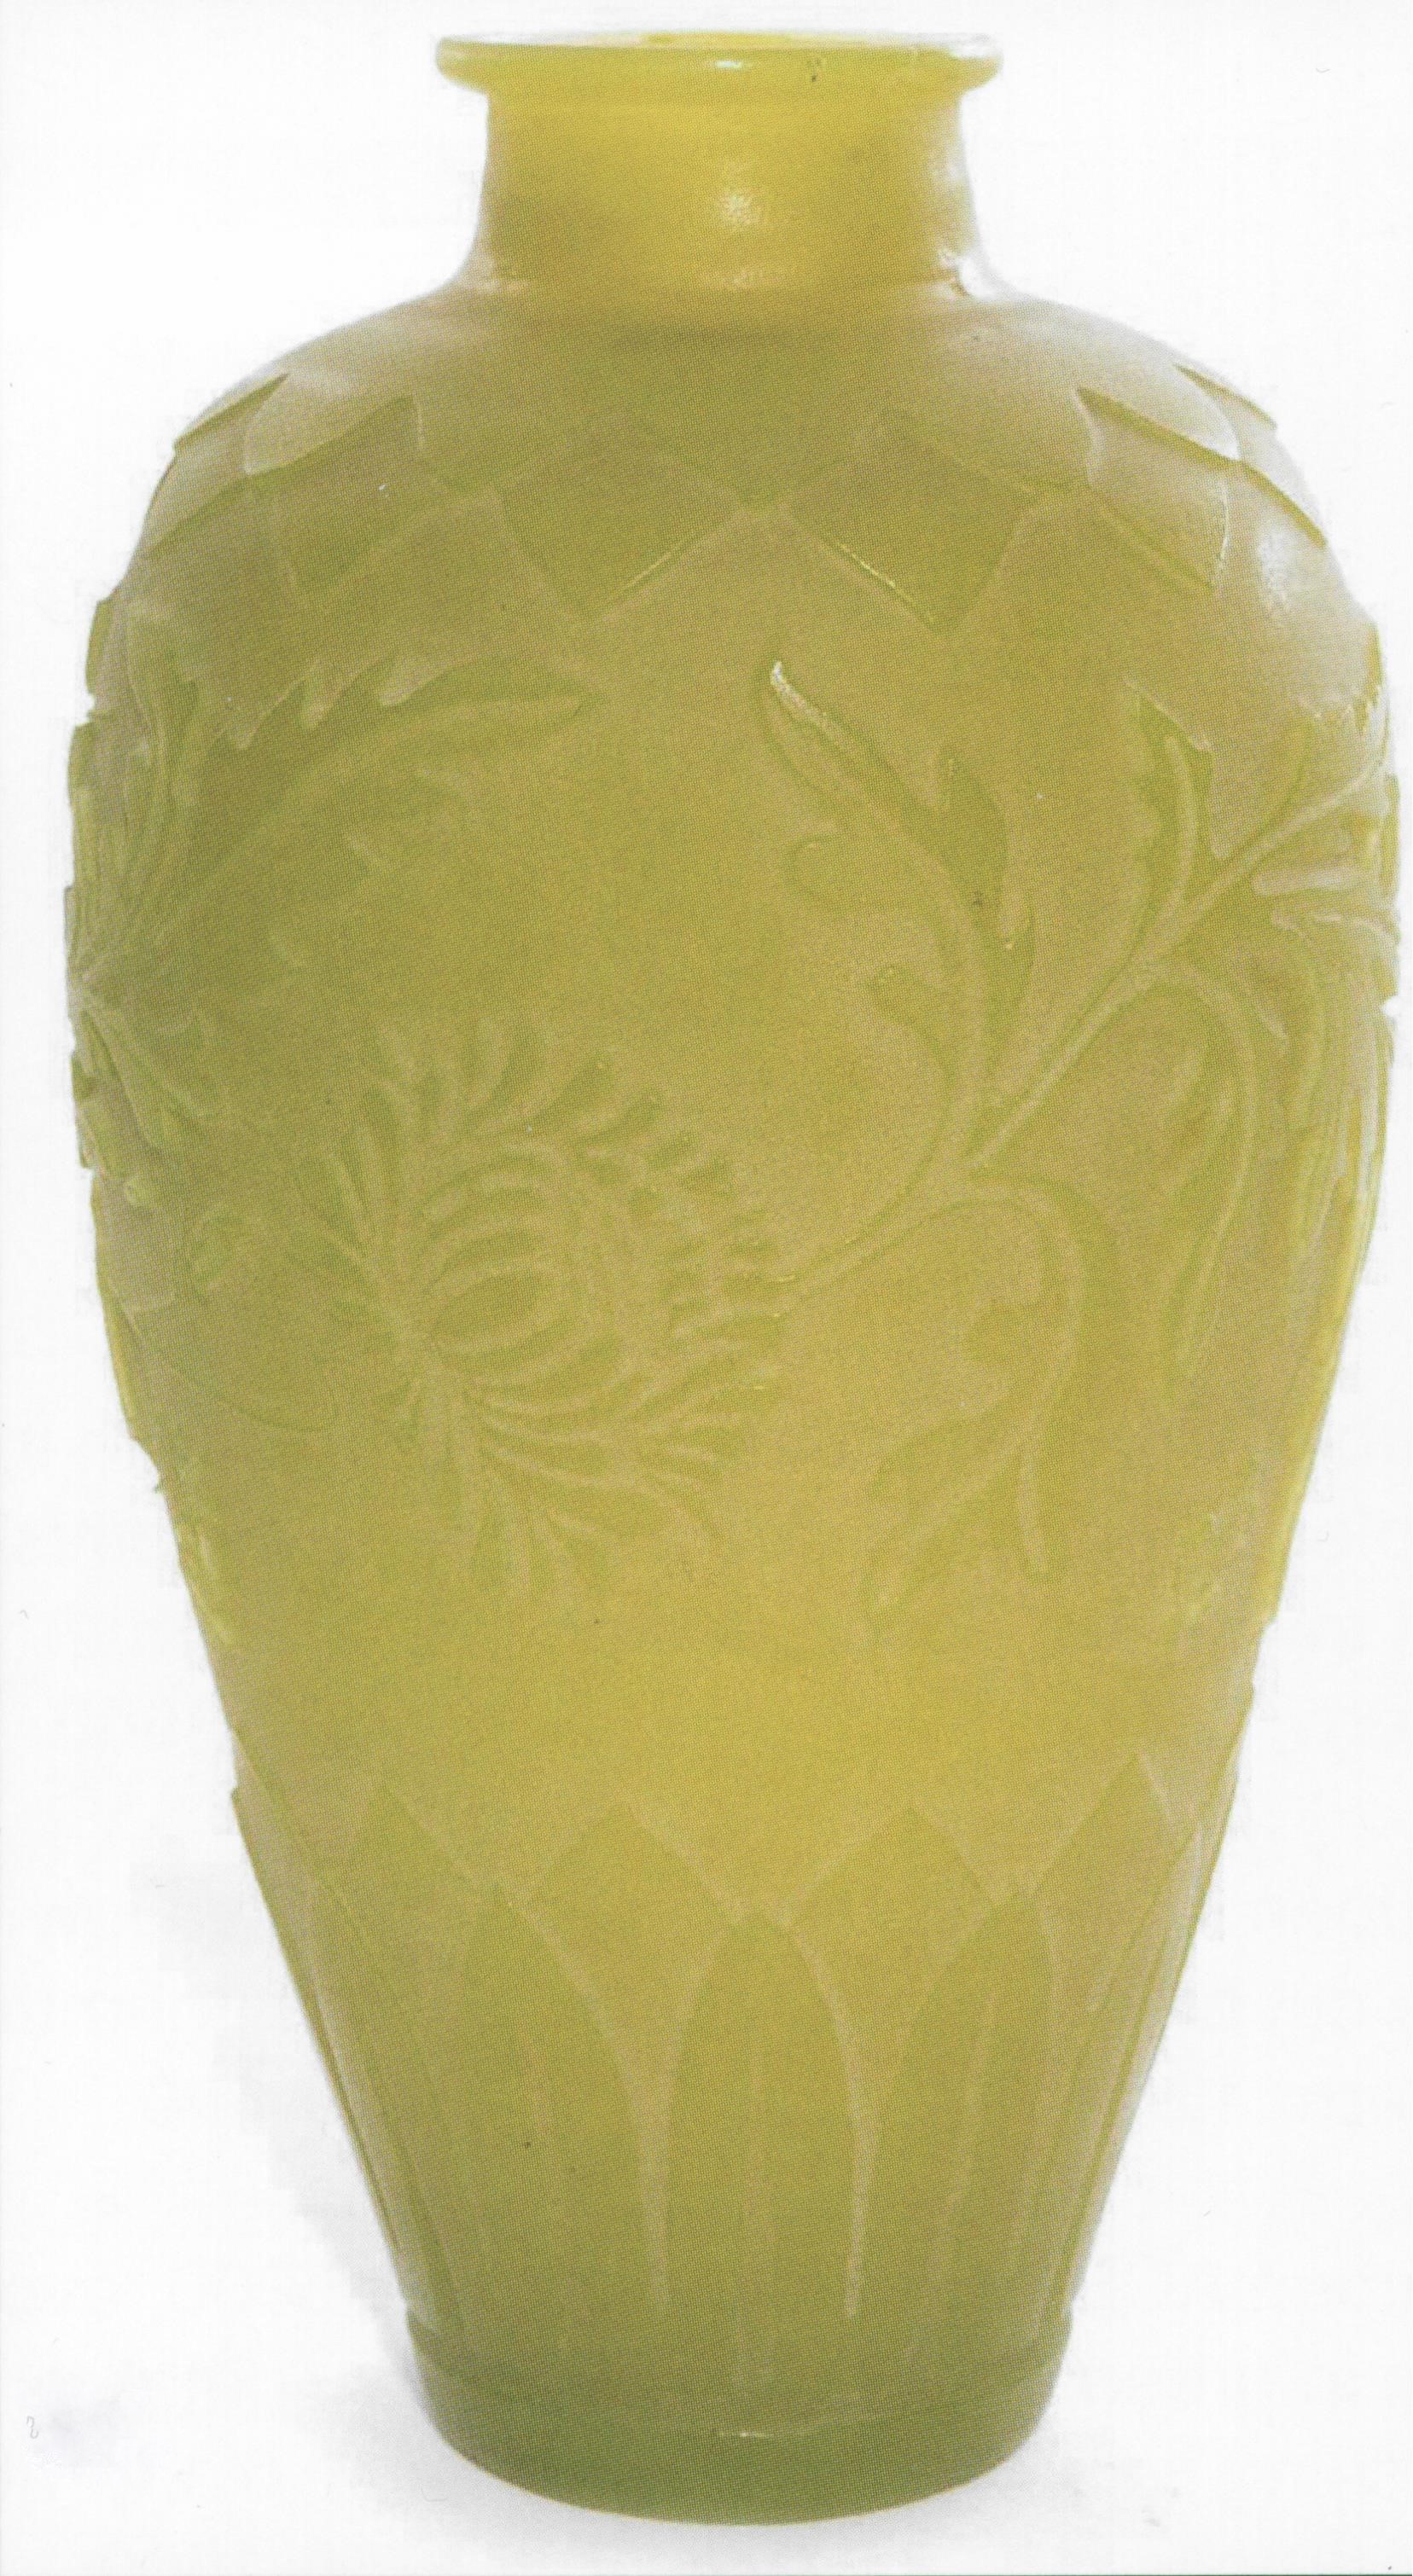 6221 - Yellow Jade Acid Etched Vase